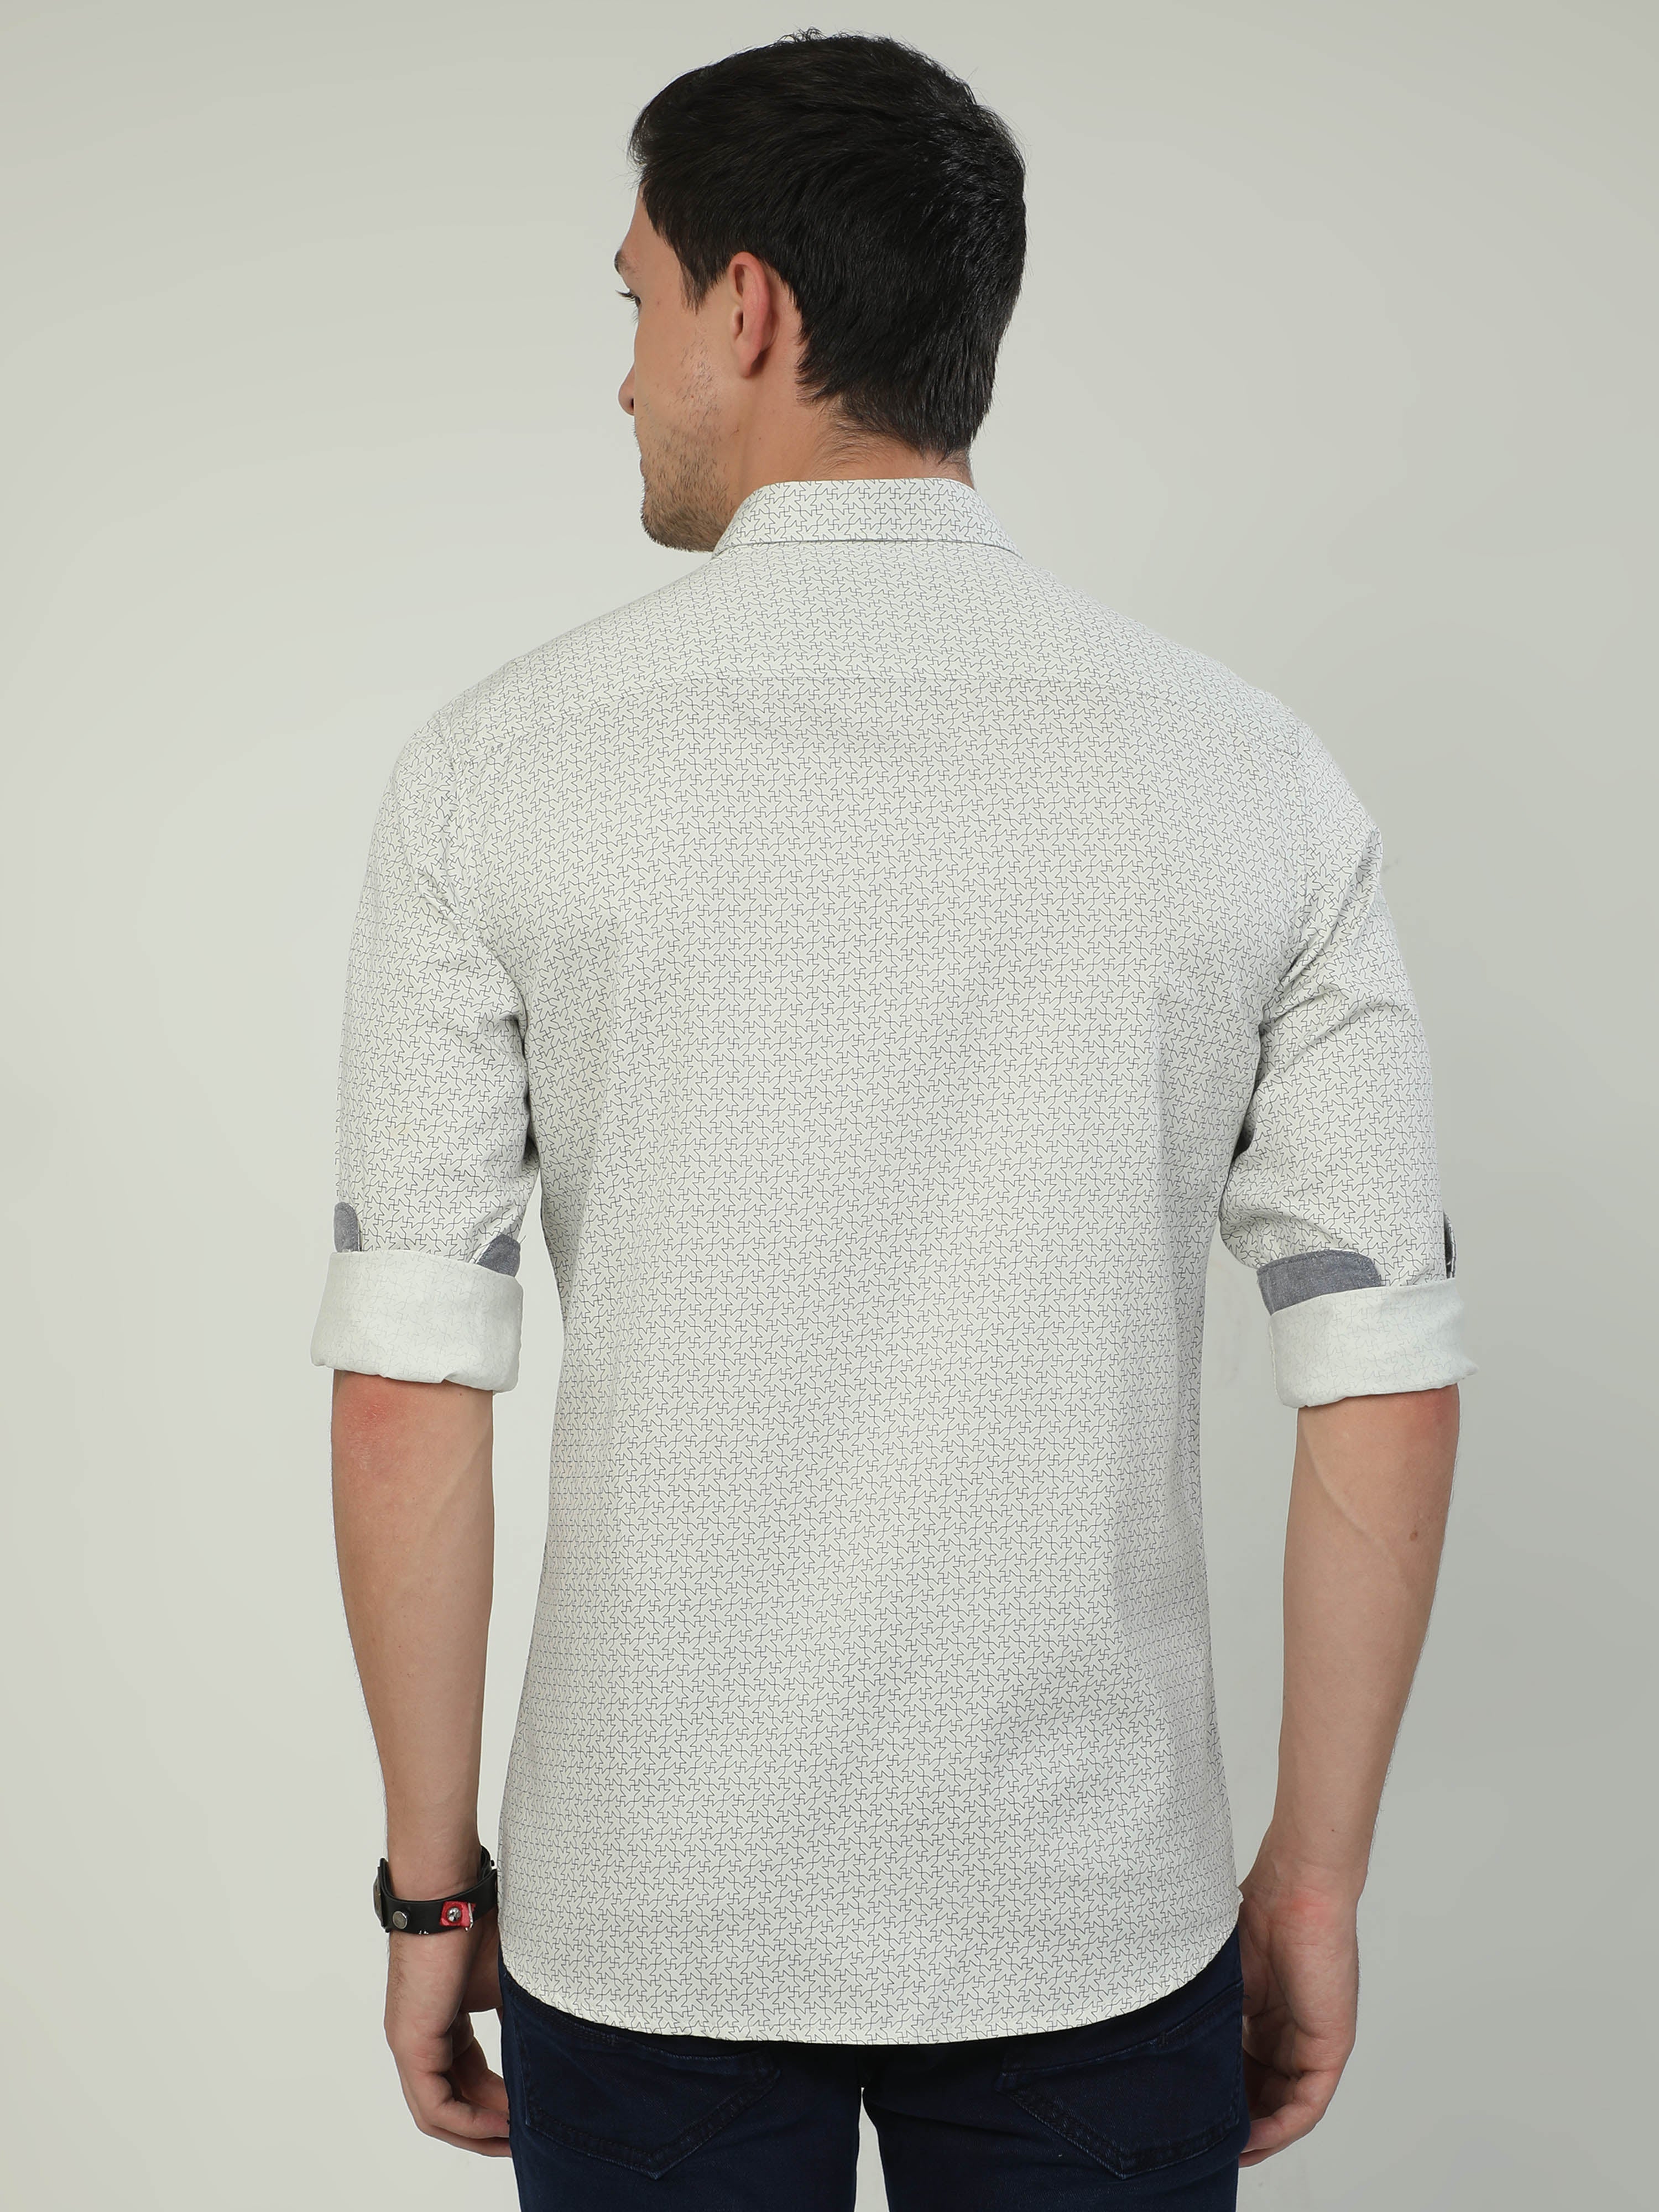 Classic Polo Men's Polo Neck Full Sleeve Slim Fit Cotton Woven Shirt | SO2-06 B-FS-PRT-SF